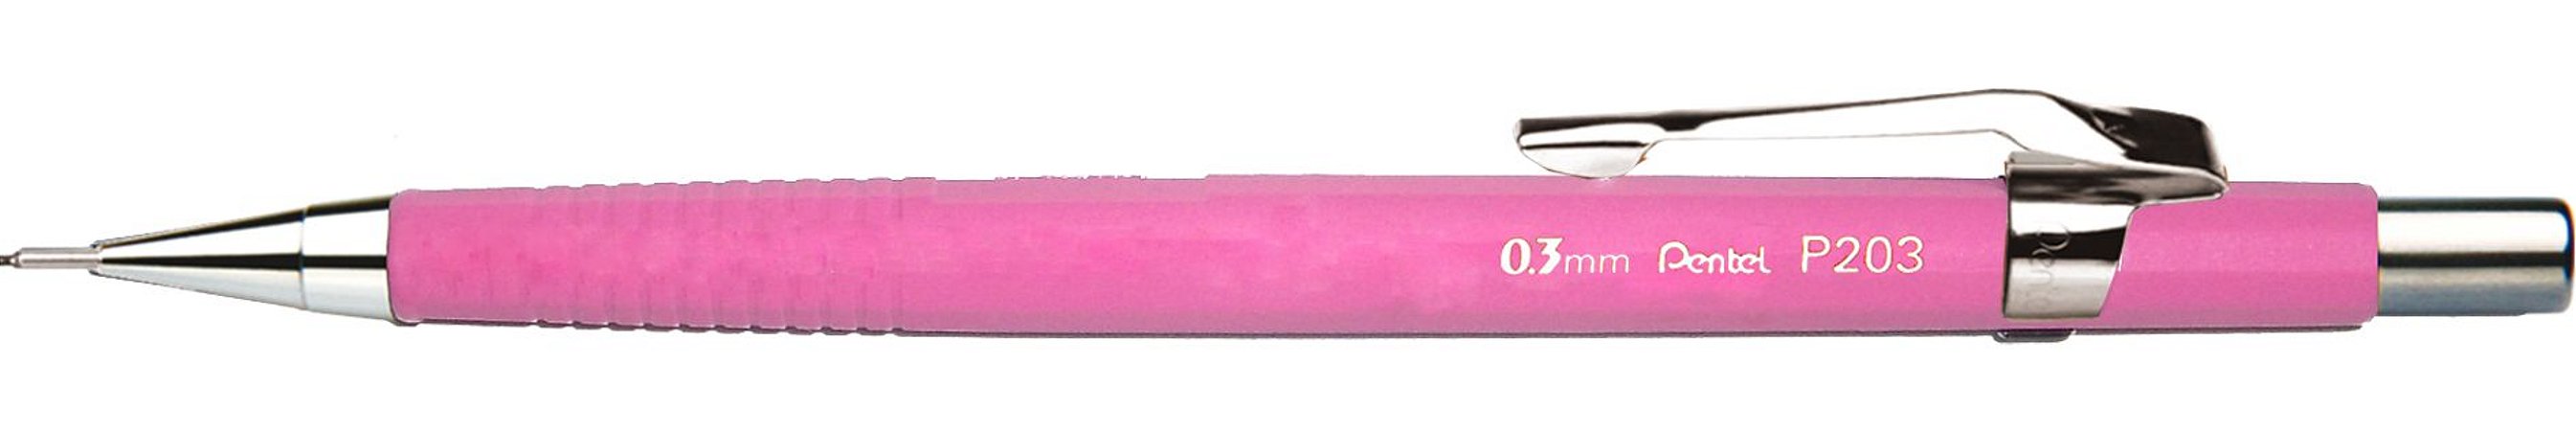 Lapiseira Pentel 0.3 Sharp P203 Rosa